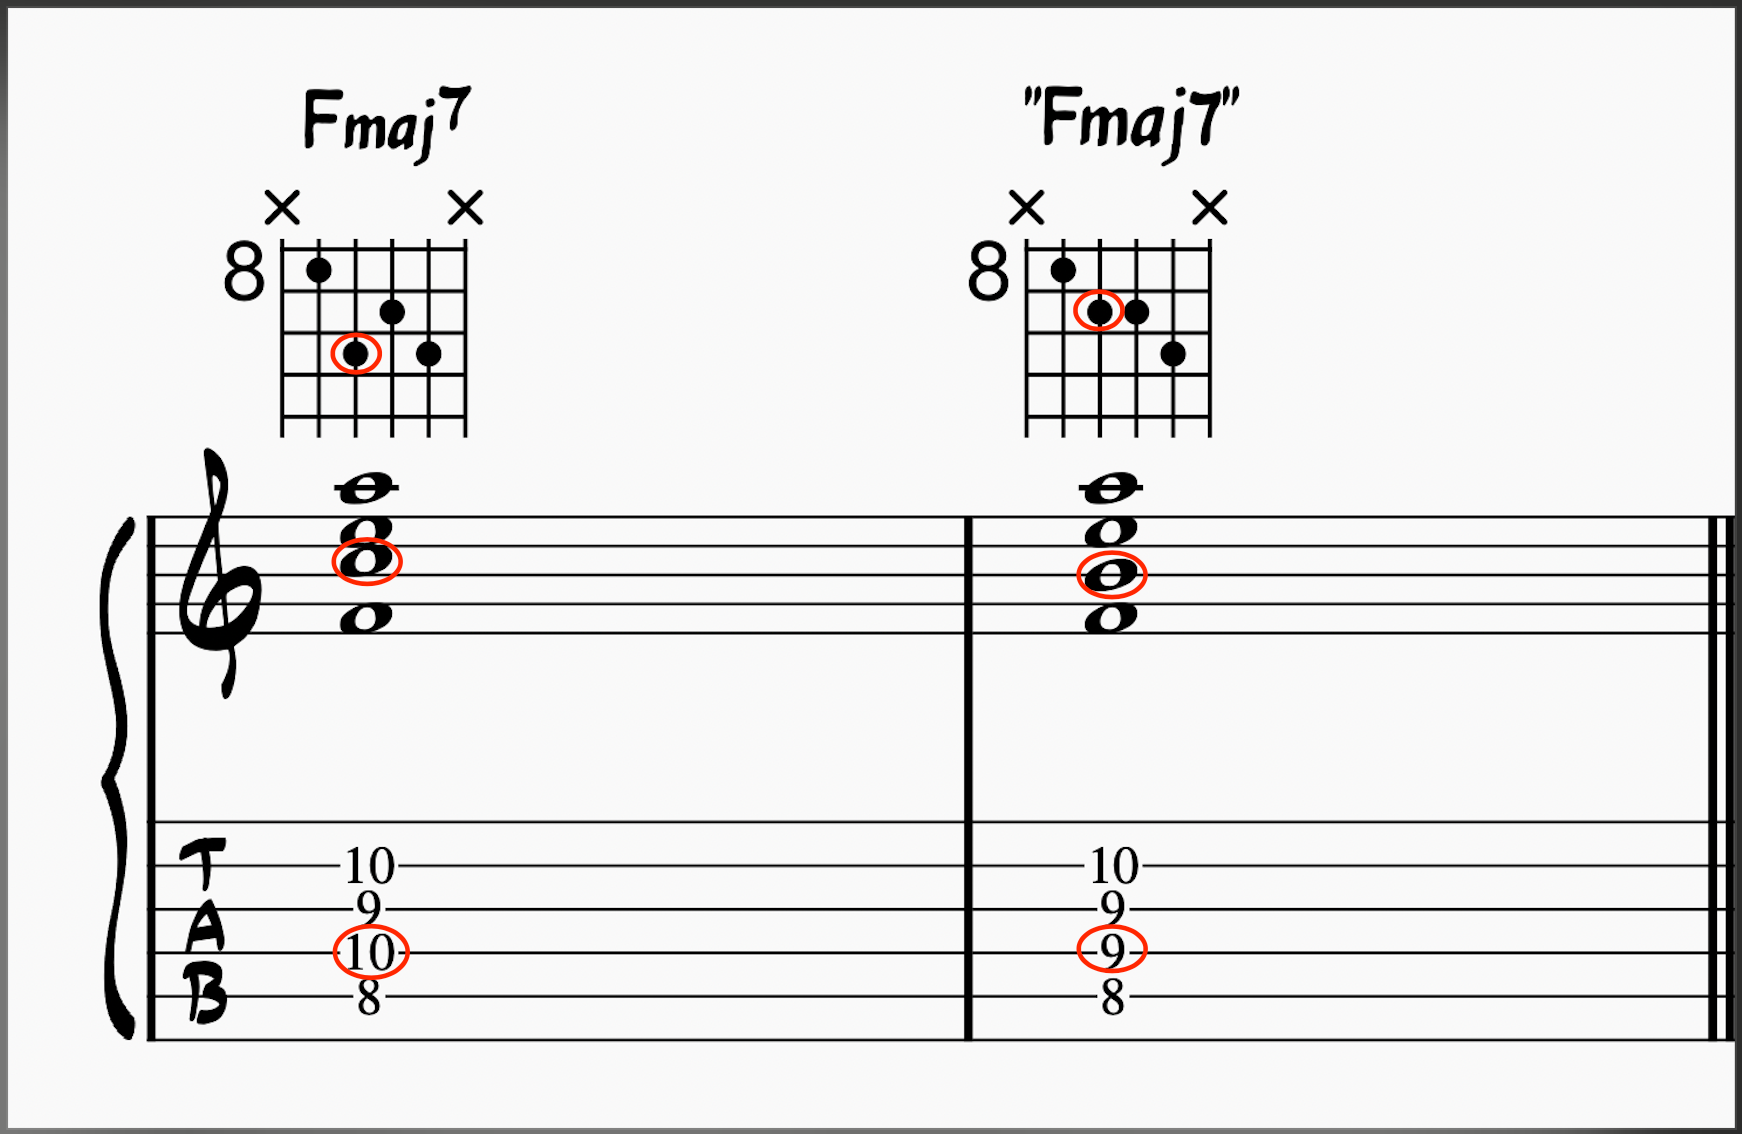 Comparing a Fmaj7 voicing on guitar to its quartal voicing equivalent 